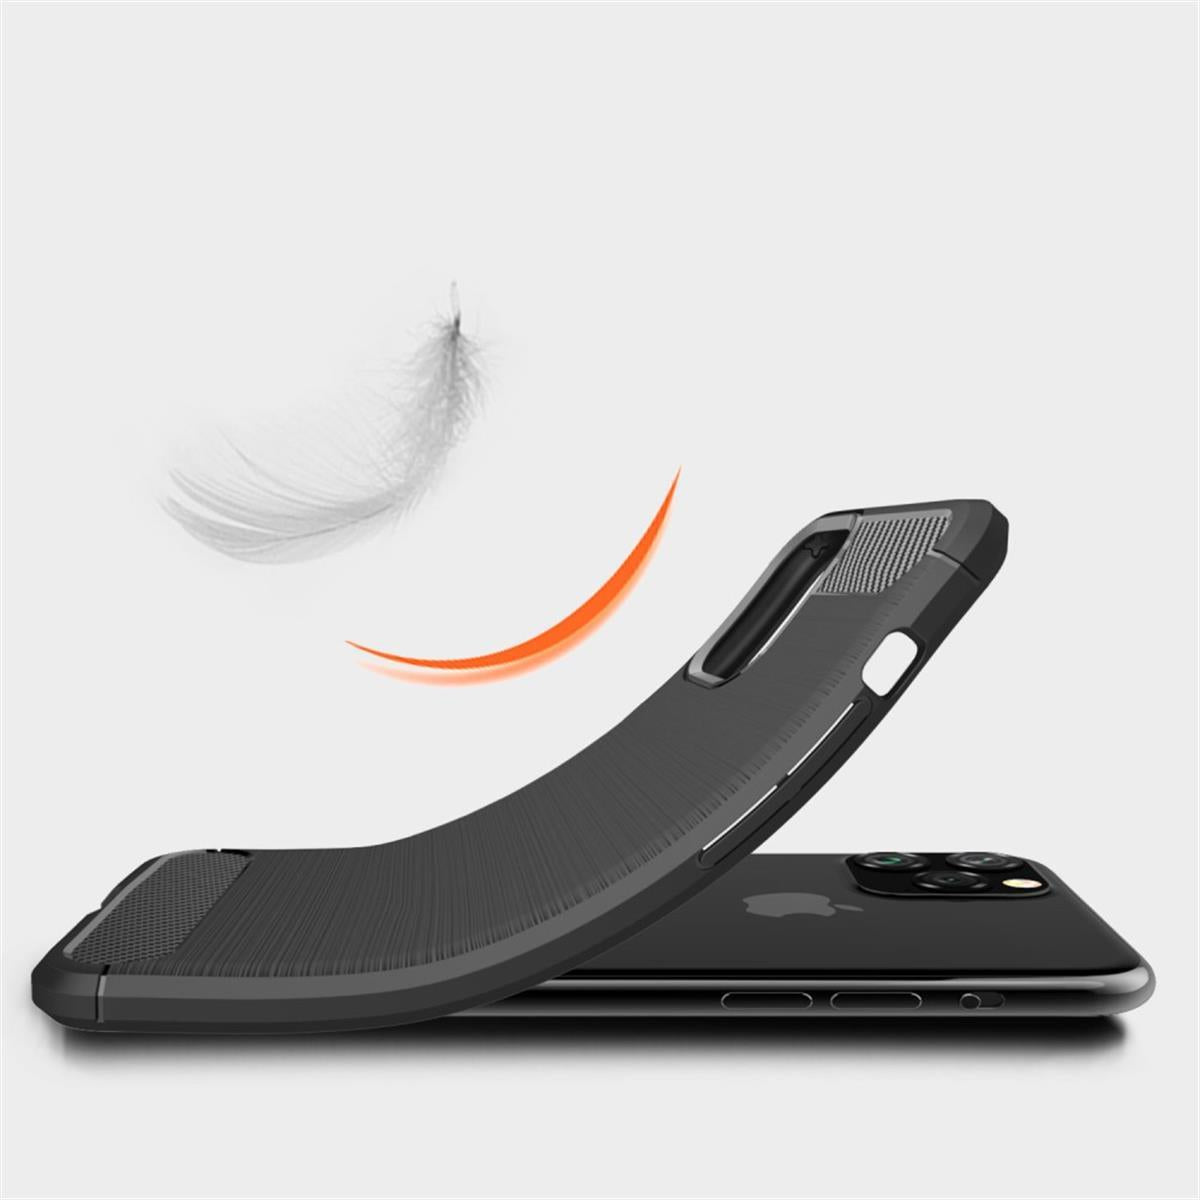 Hülle für Apple iPhone 11 [6,1 Zoll] Handyhülle Silikon Cover Schutzhülle Carbon